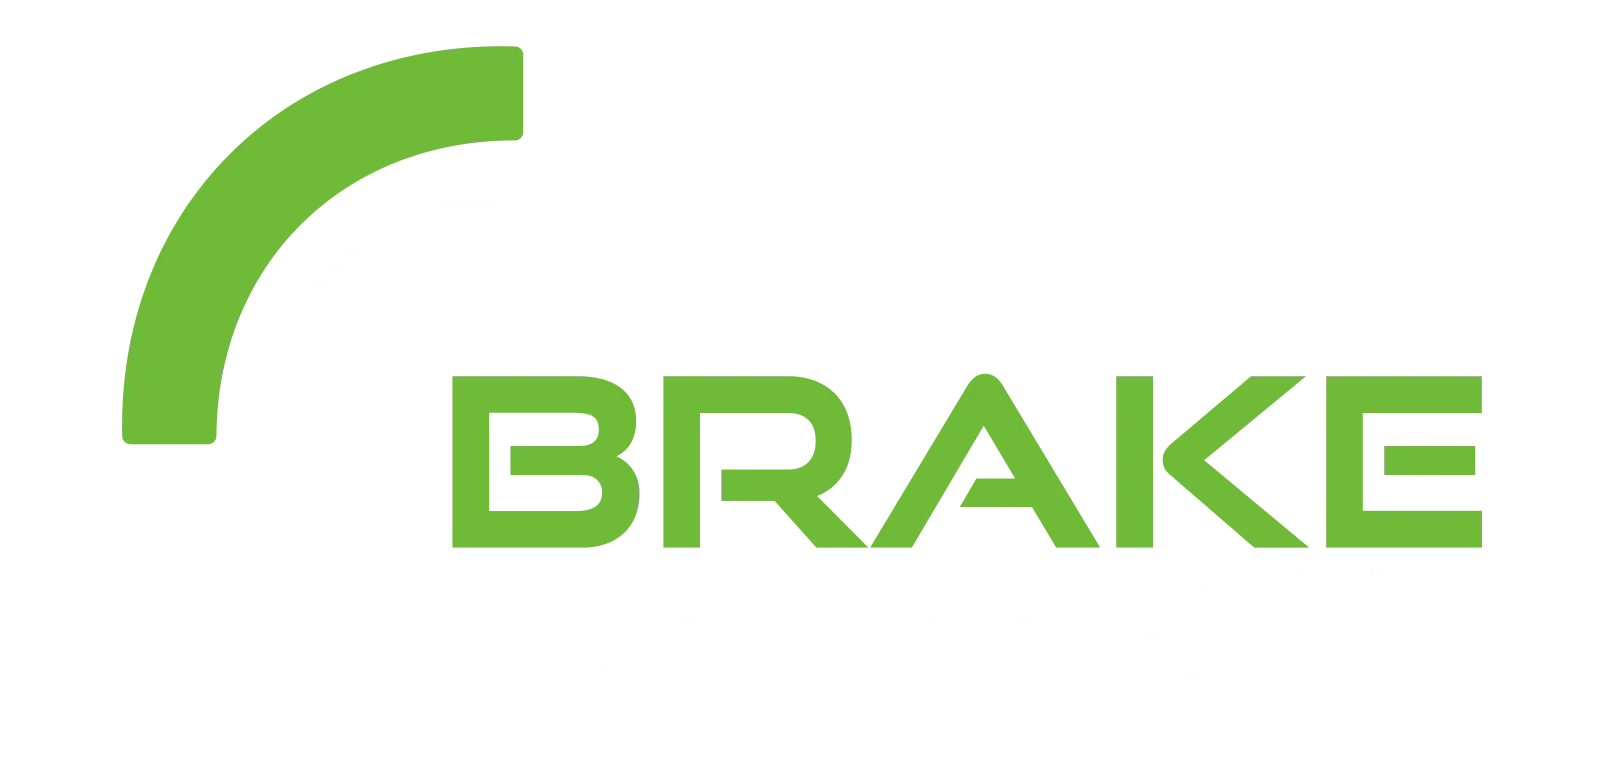 BrakeTRONIK-LOGO-Wireless-Remote-Control-Brake-Optimizer-Revtronik